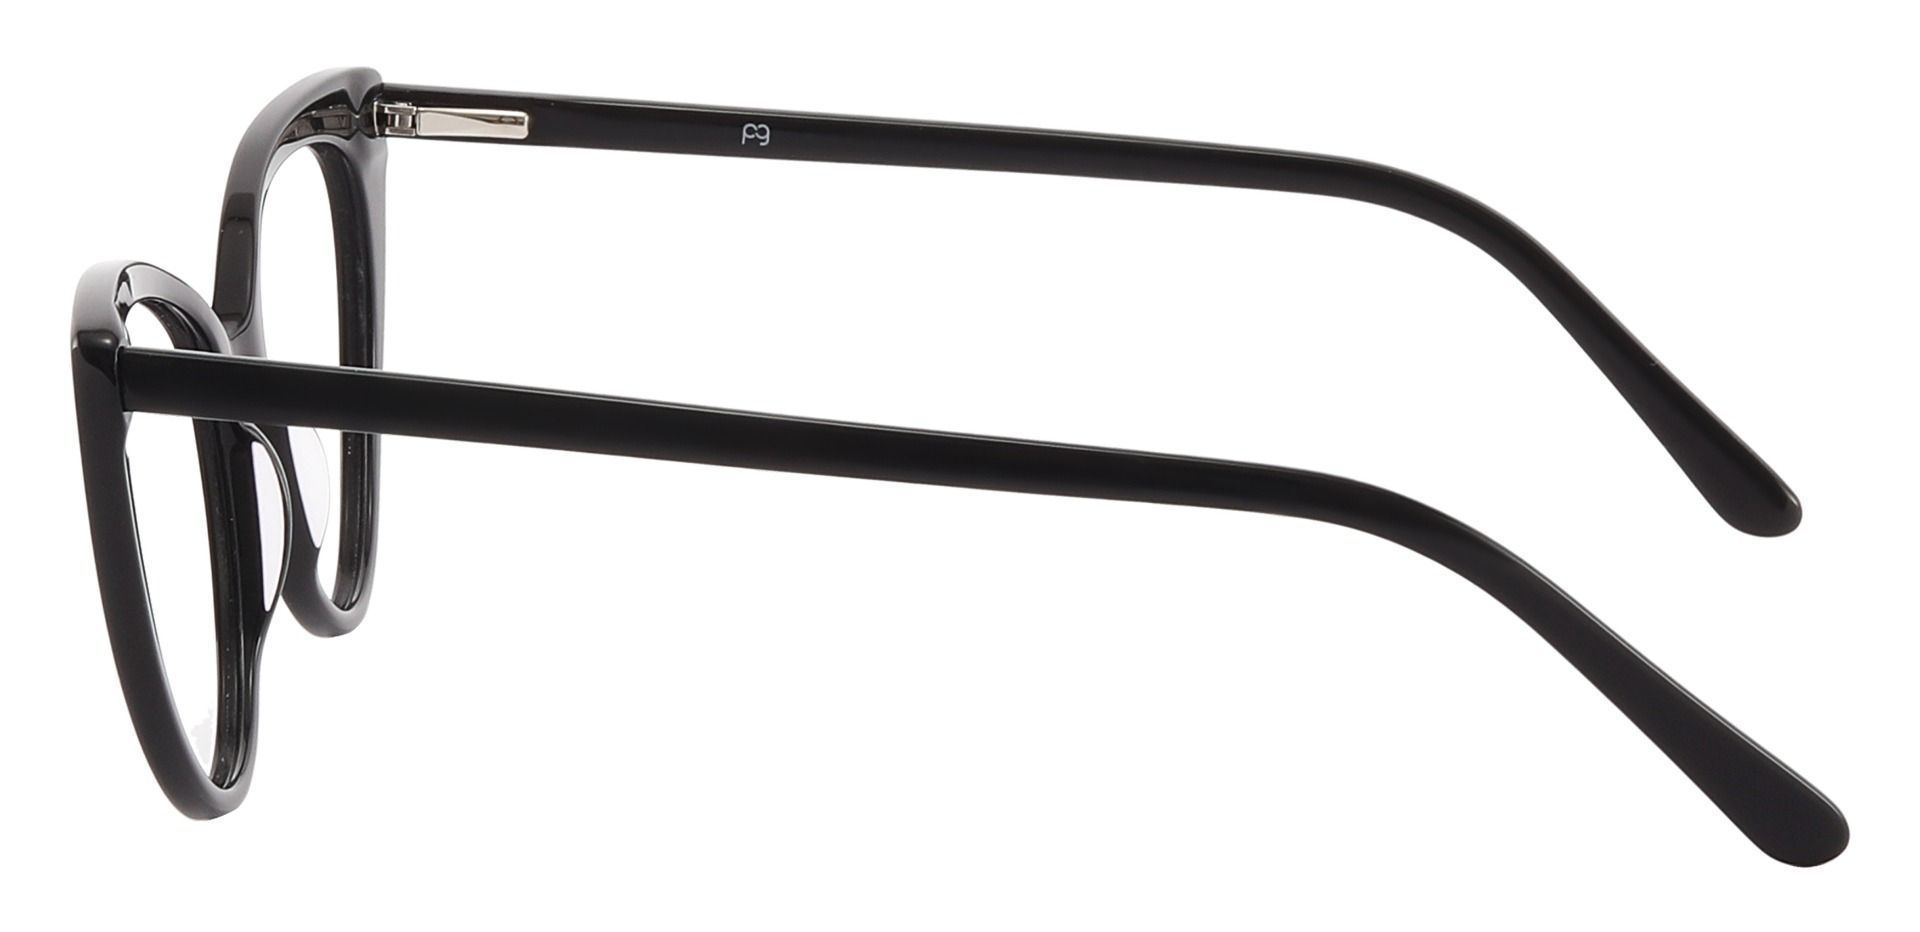 Bristol Cat Eye Progressive Glasses - Black